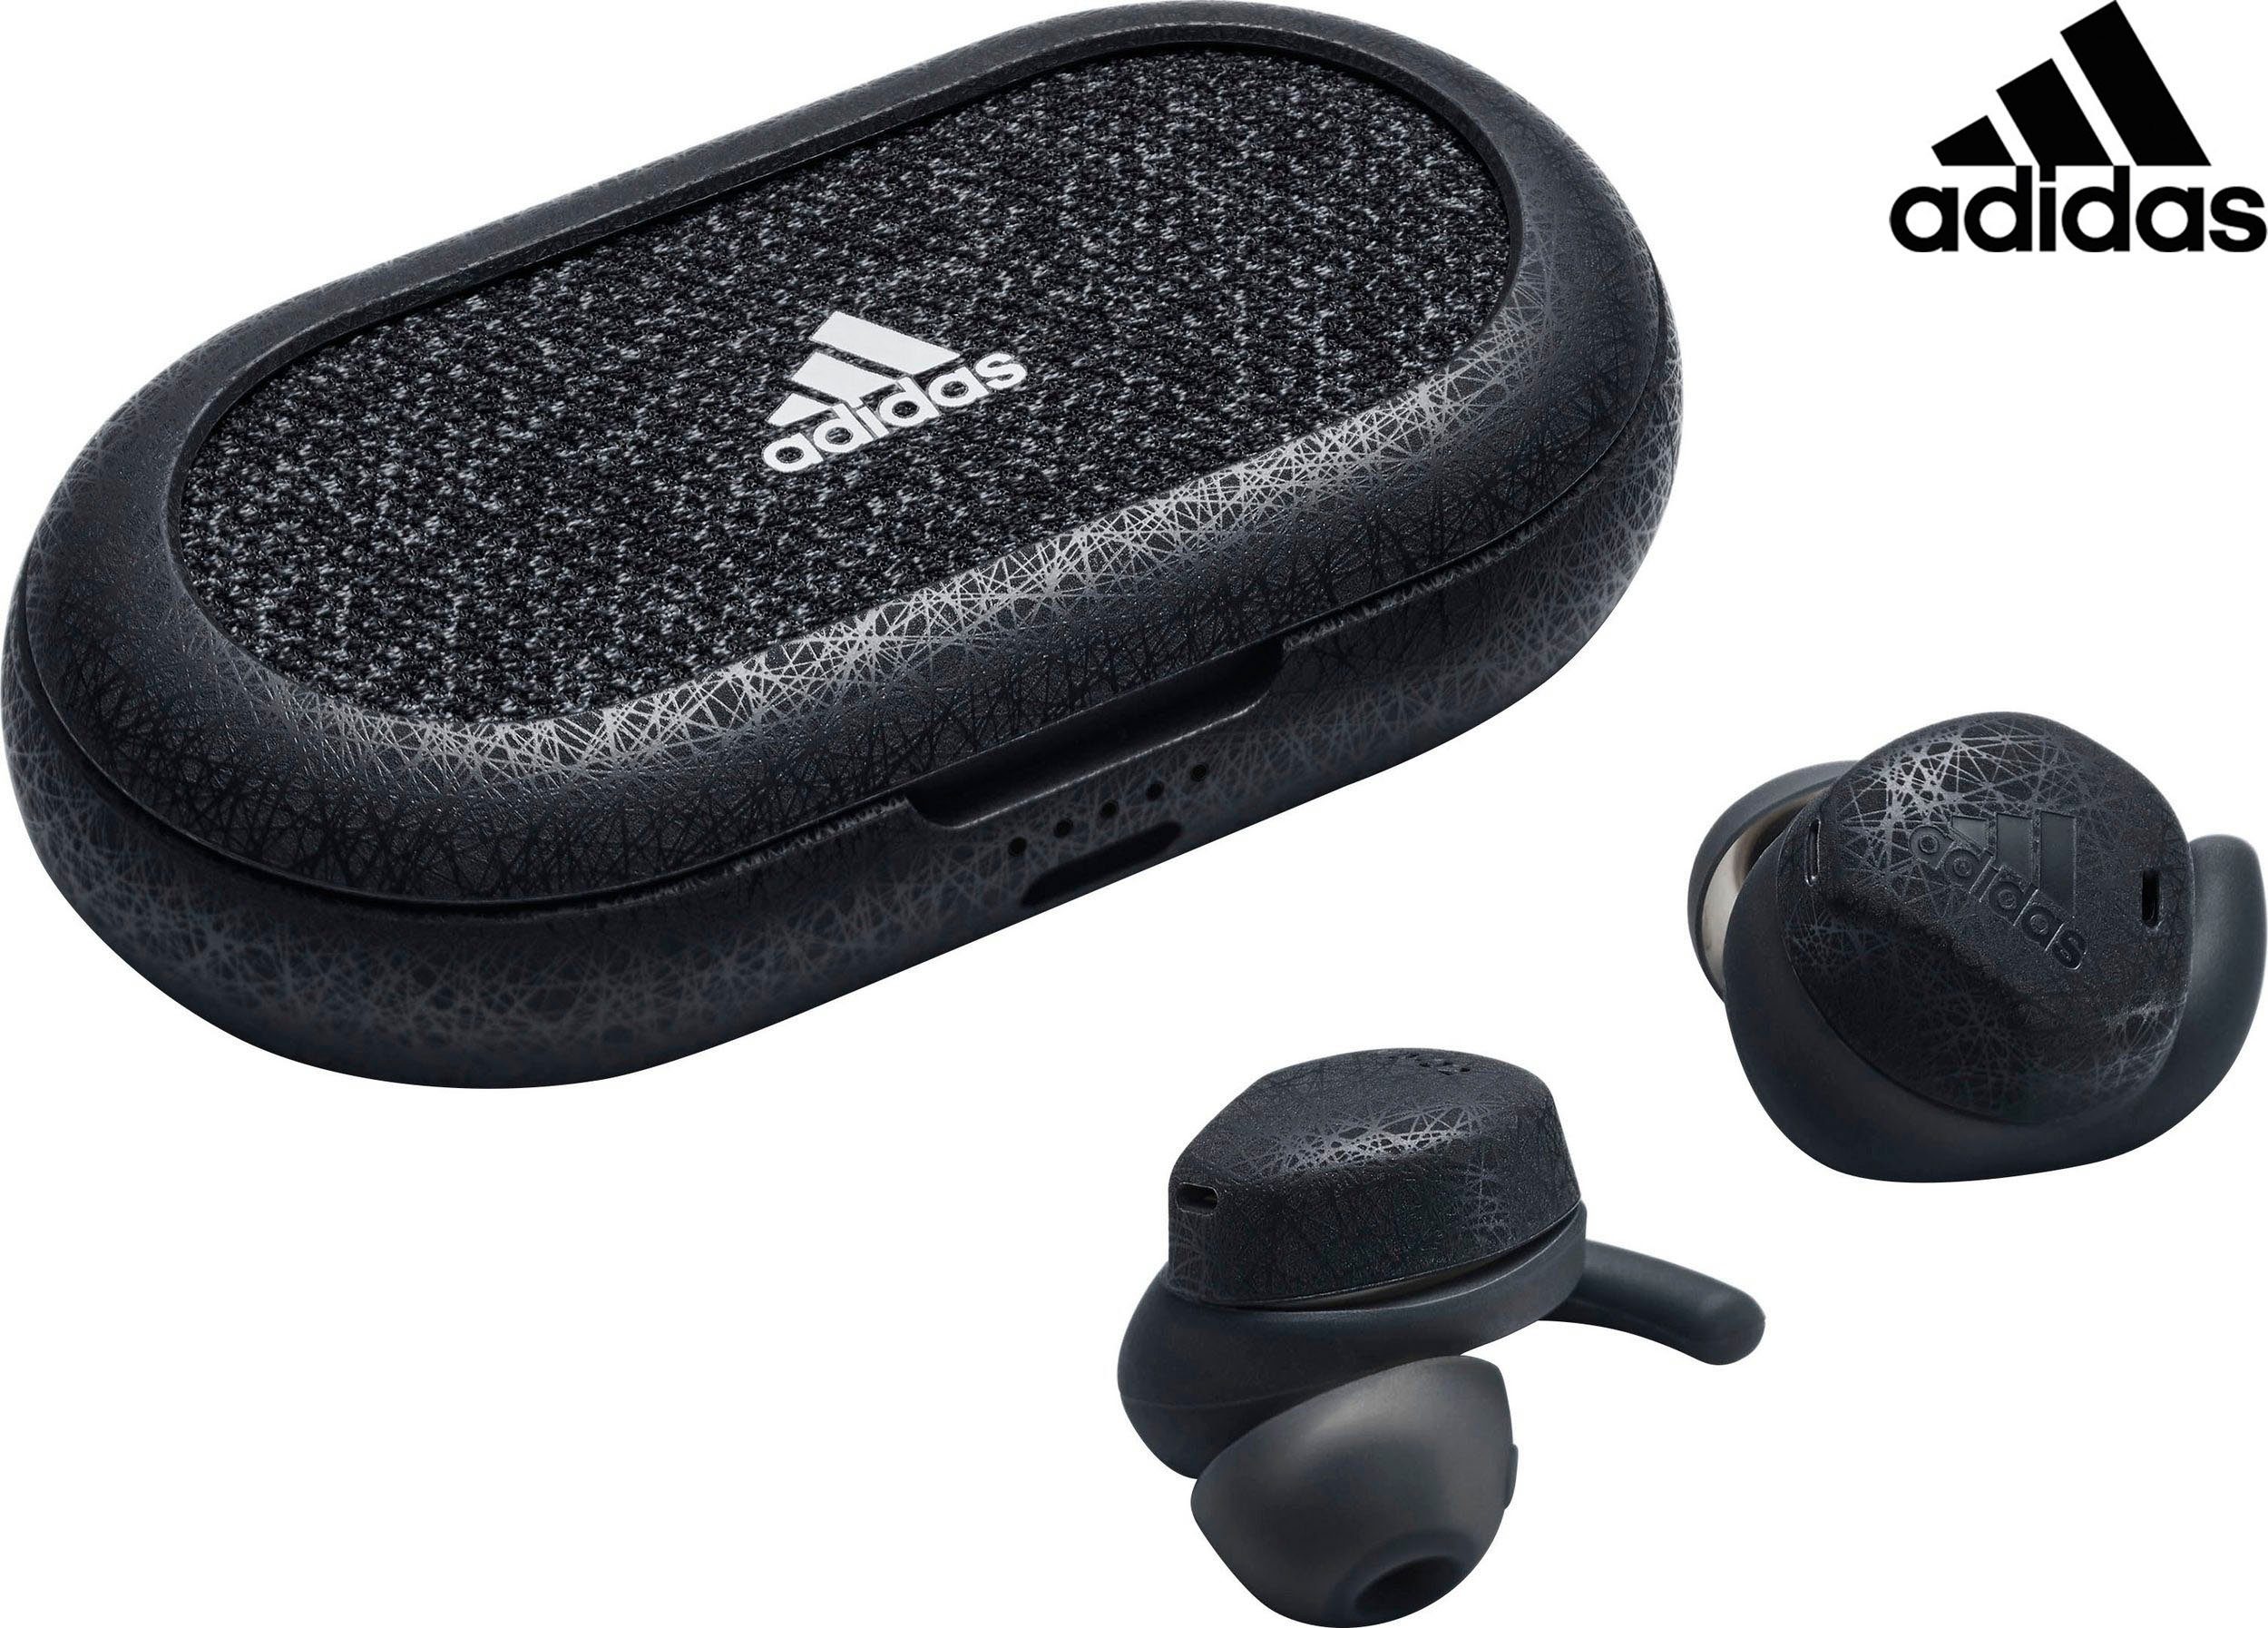 adidas Originals FWD-02 SPORT In-Ear-Kopfhörer (Geräuschisolierung, Bluetooth, Sportkopfhörer) dunkelgrau